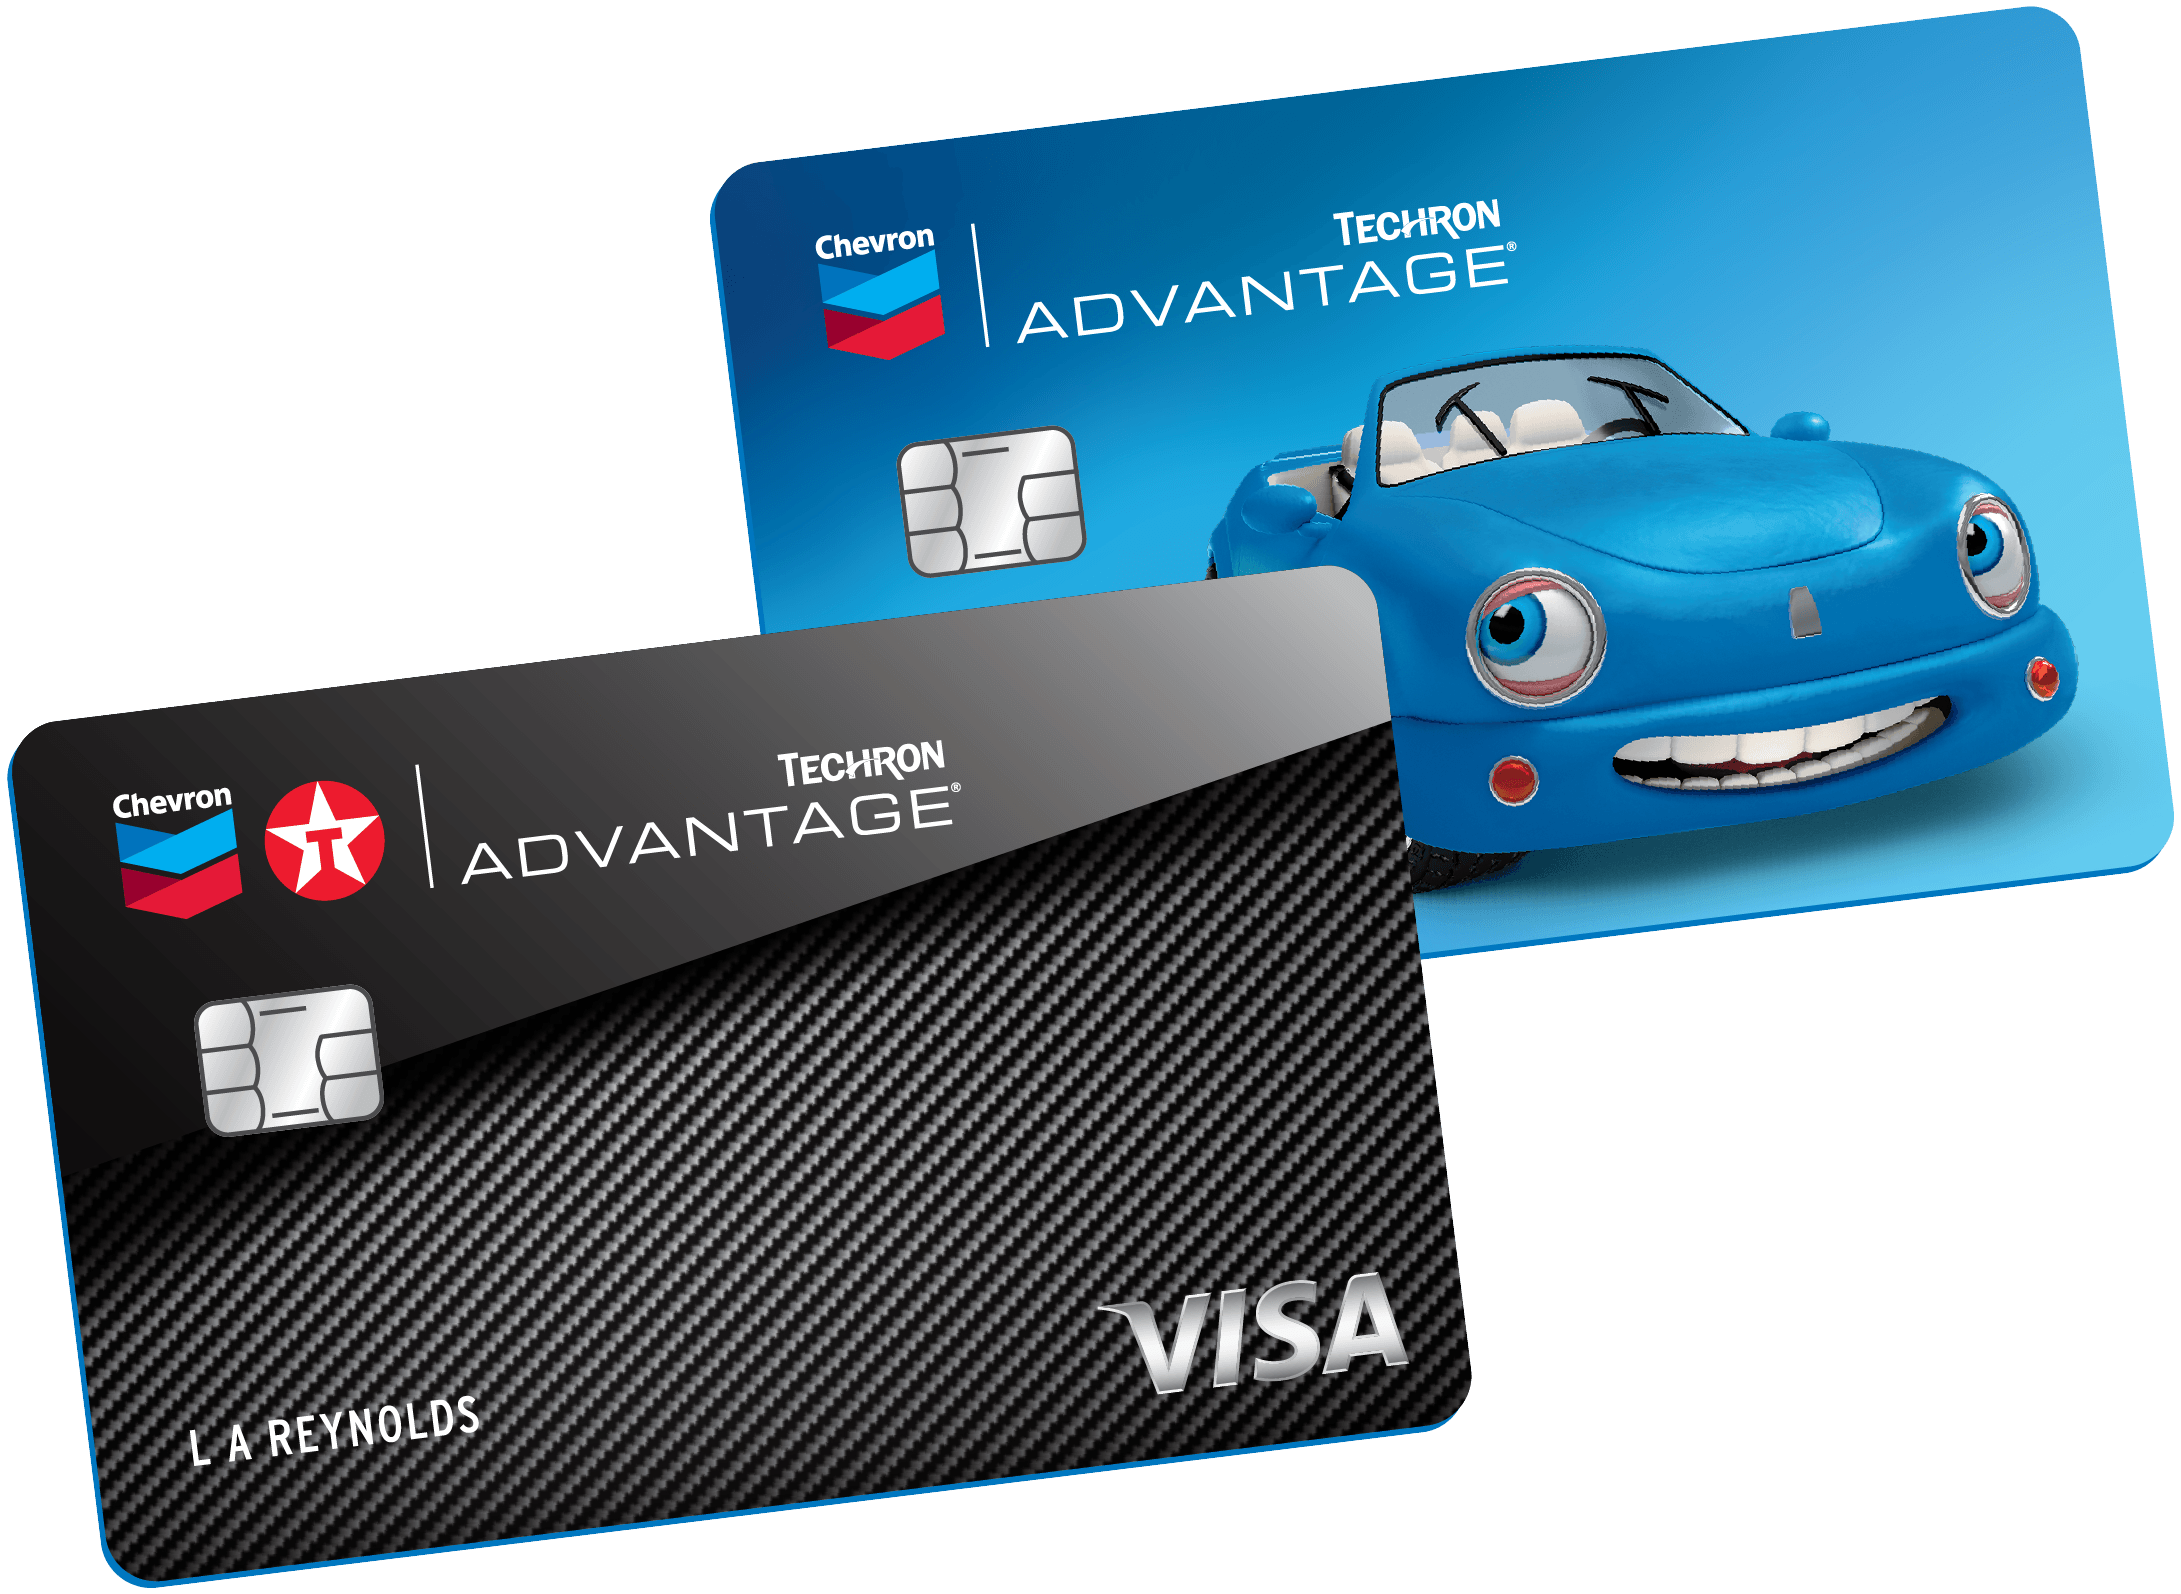 Advantage credit cards